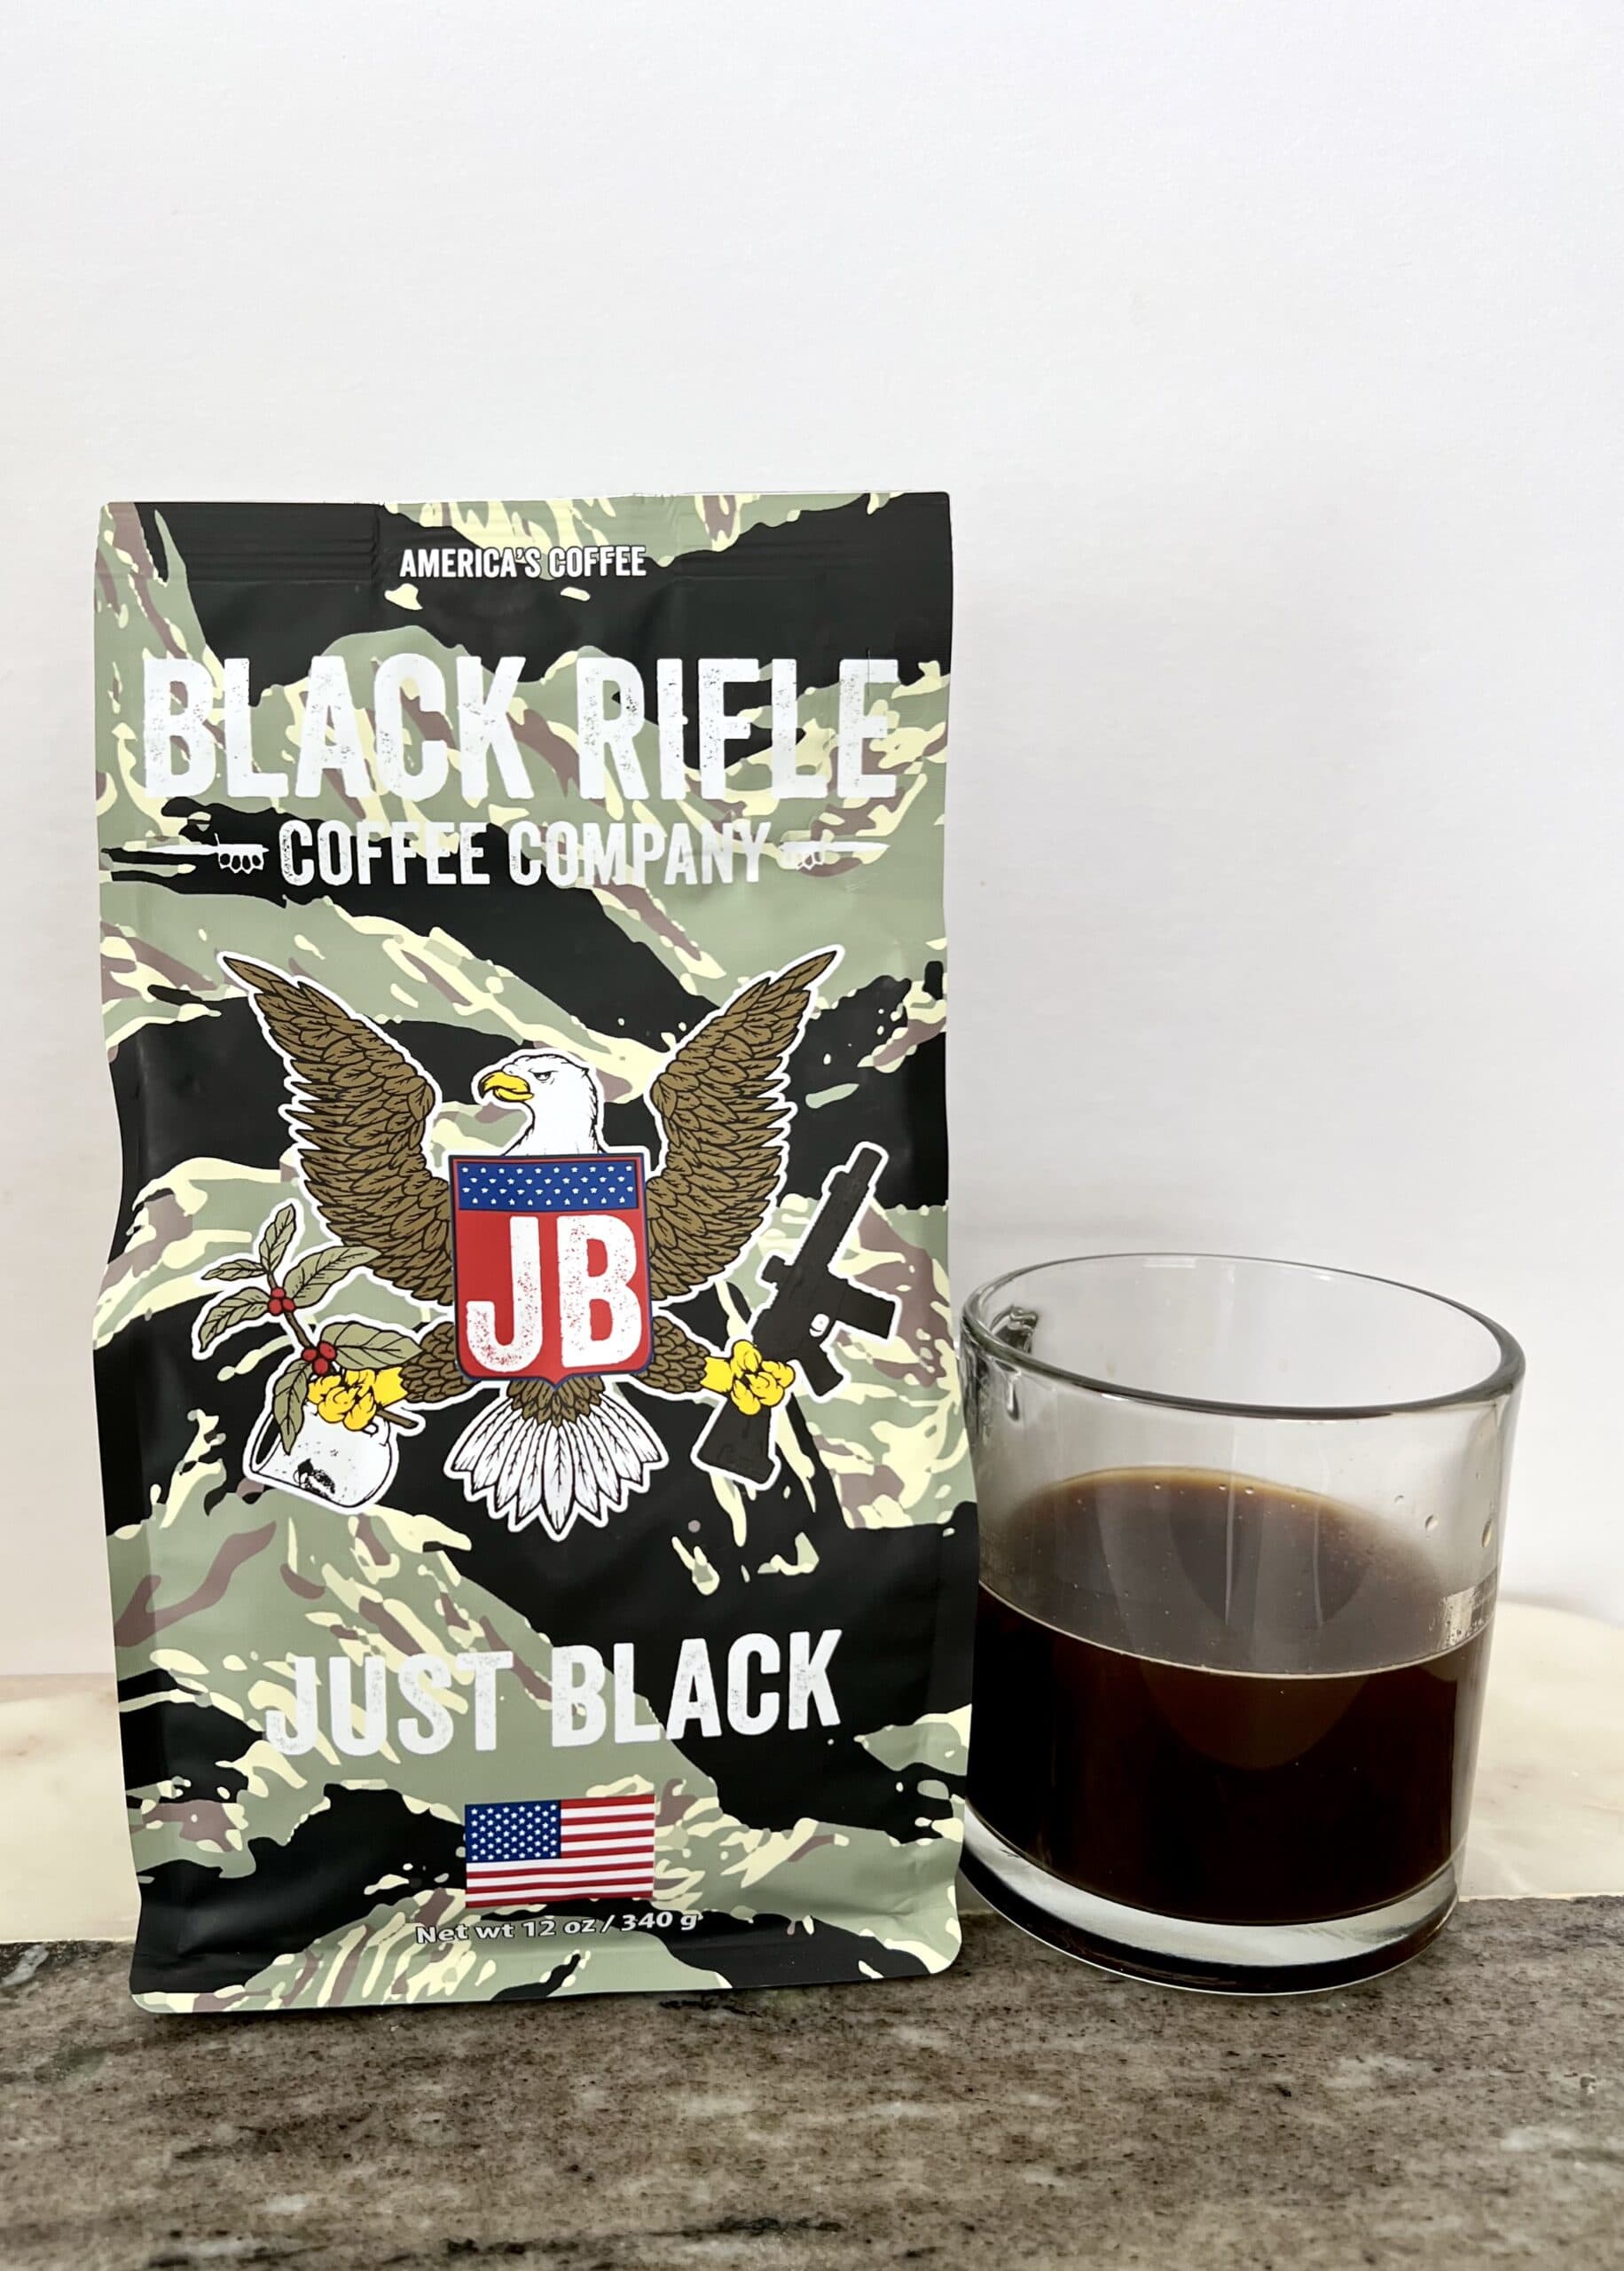 Just Black - Black Rifle Coffee next to the brewed coffee mugs